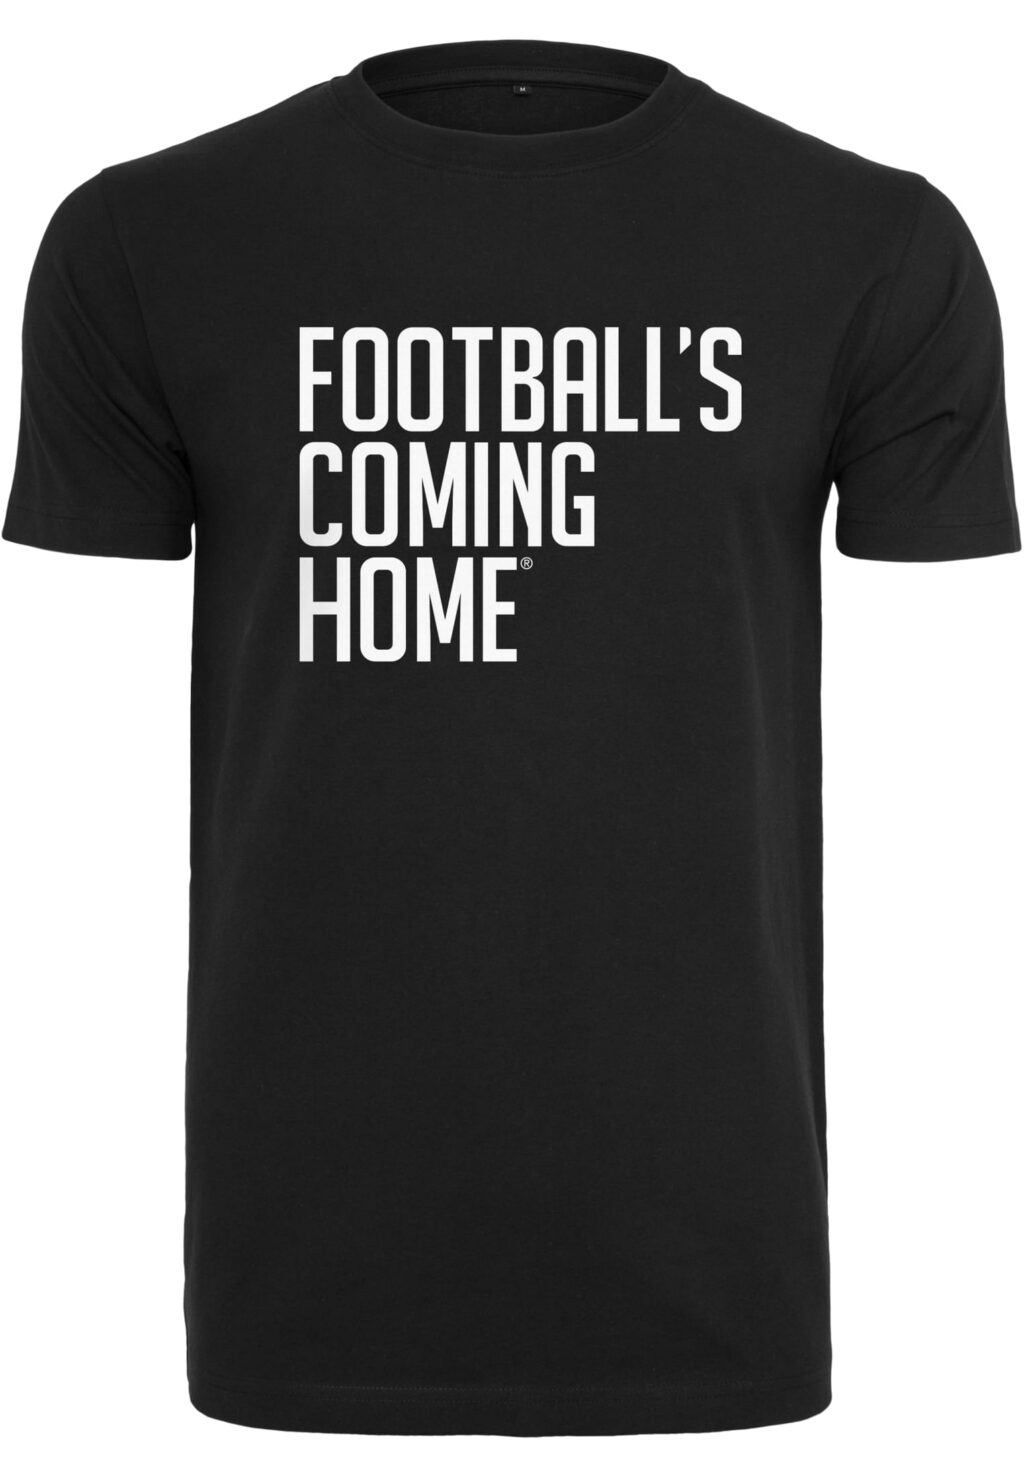 Footballs Coming Home Logo Tee black MC874